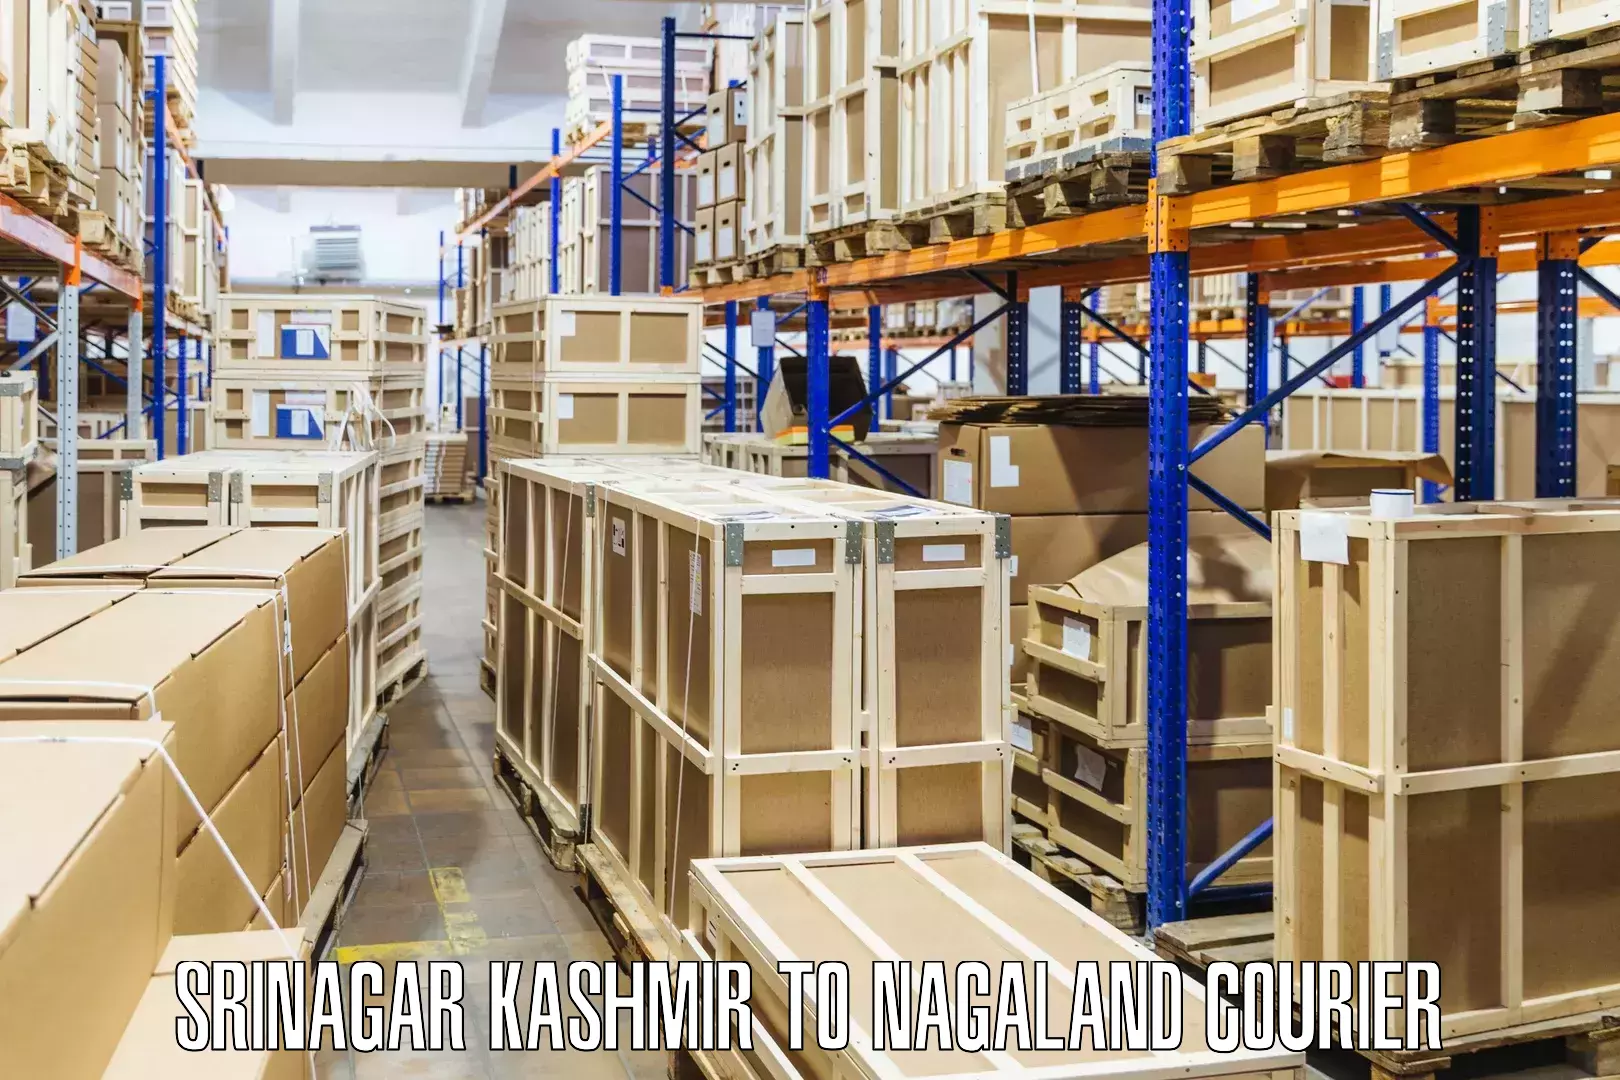 Courier service innovation Srinagar Kashmir to Nagaland